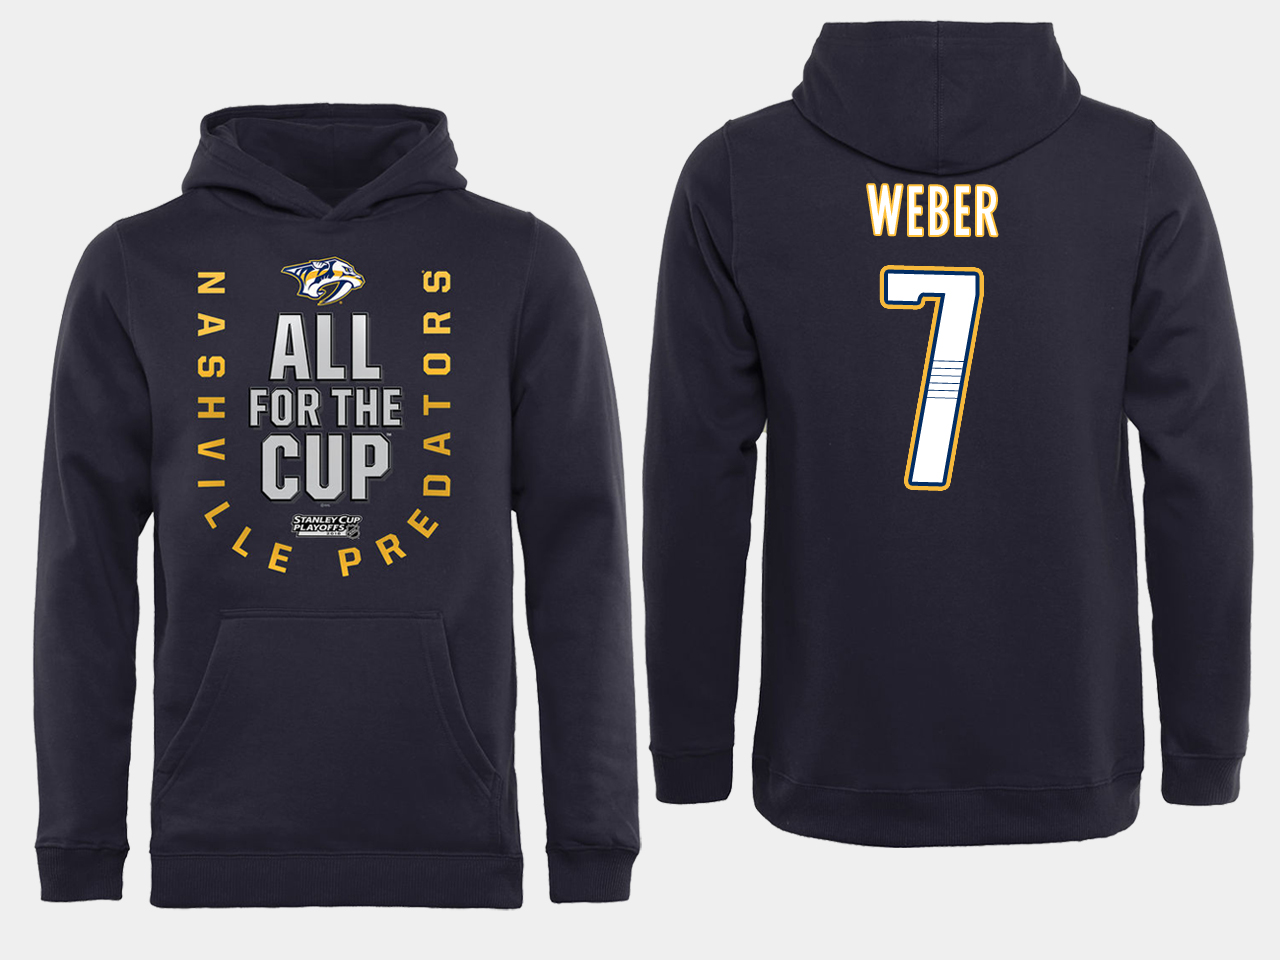 Men NHL Adidas Nashville Predators #7 Weber black ALL for the Cup hoodie